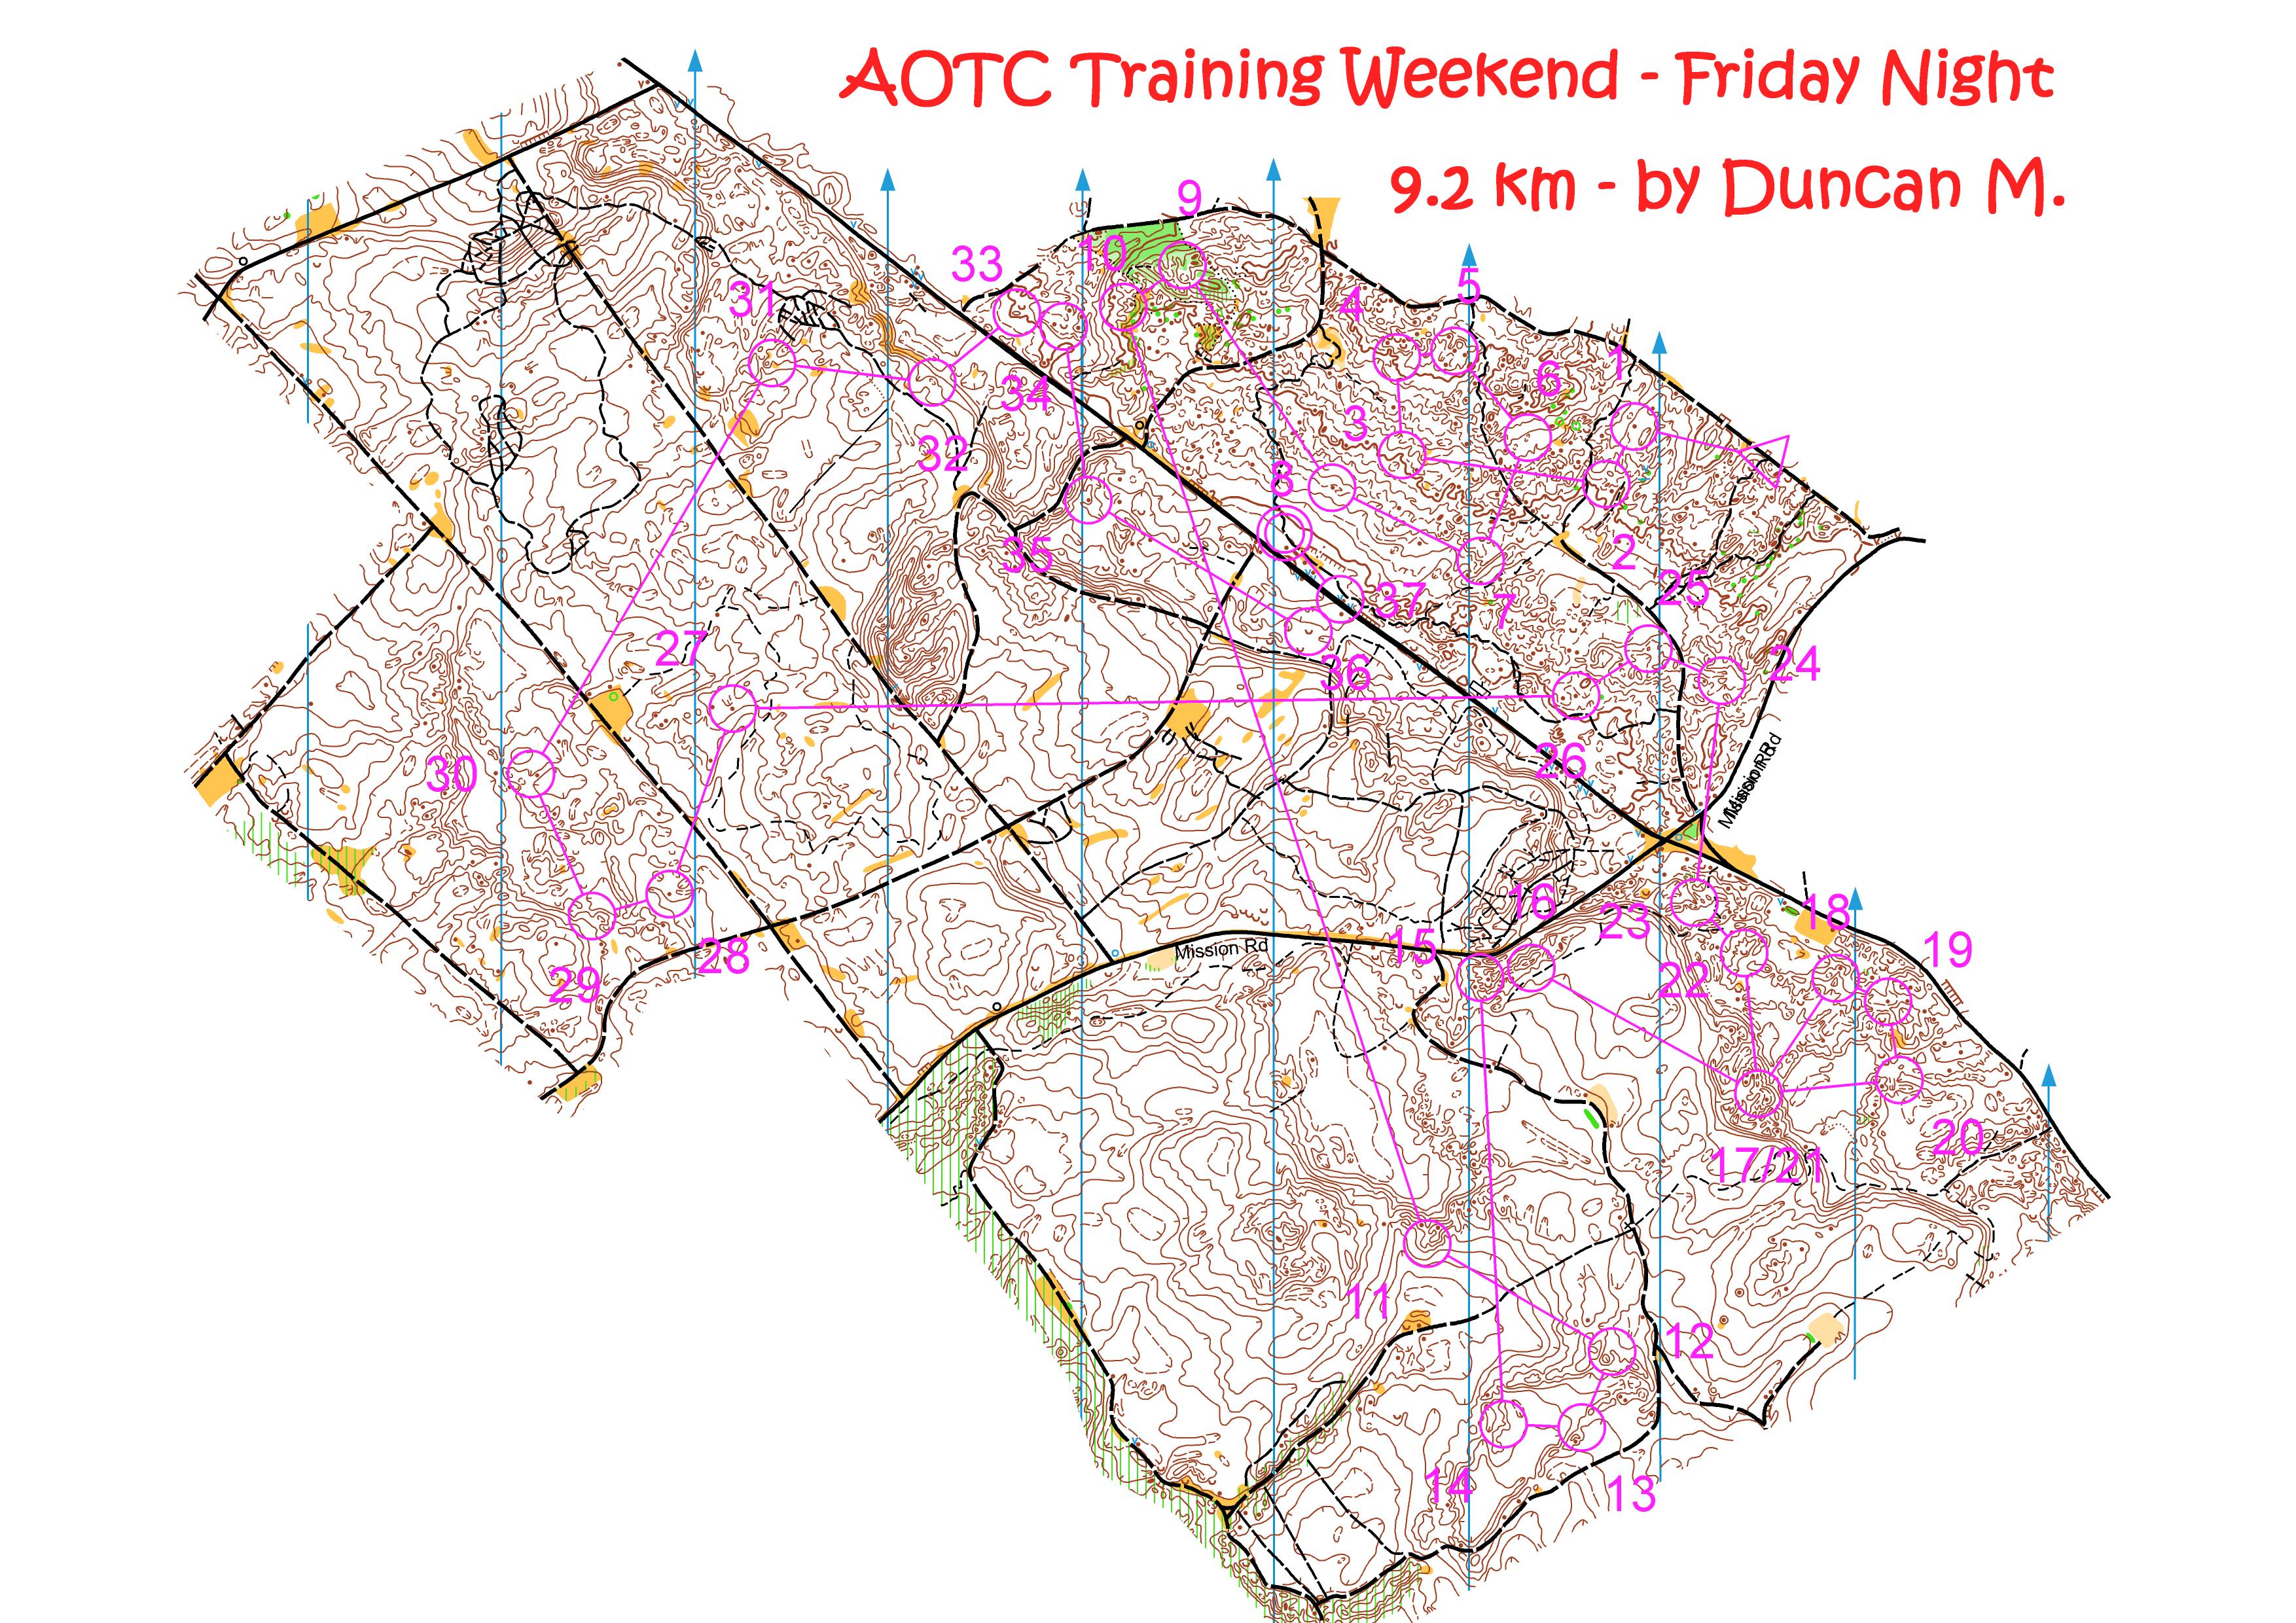 AOTC Training Weekend - Friday Night (16/11/2012)